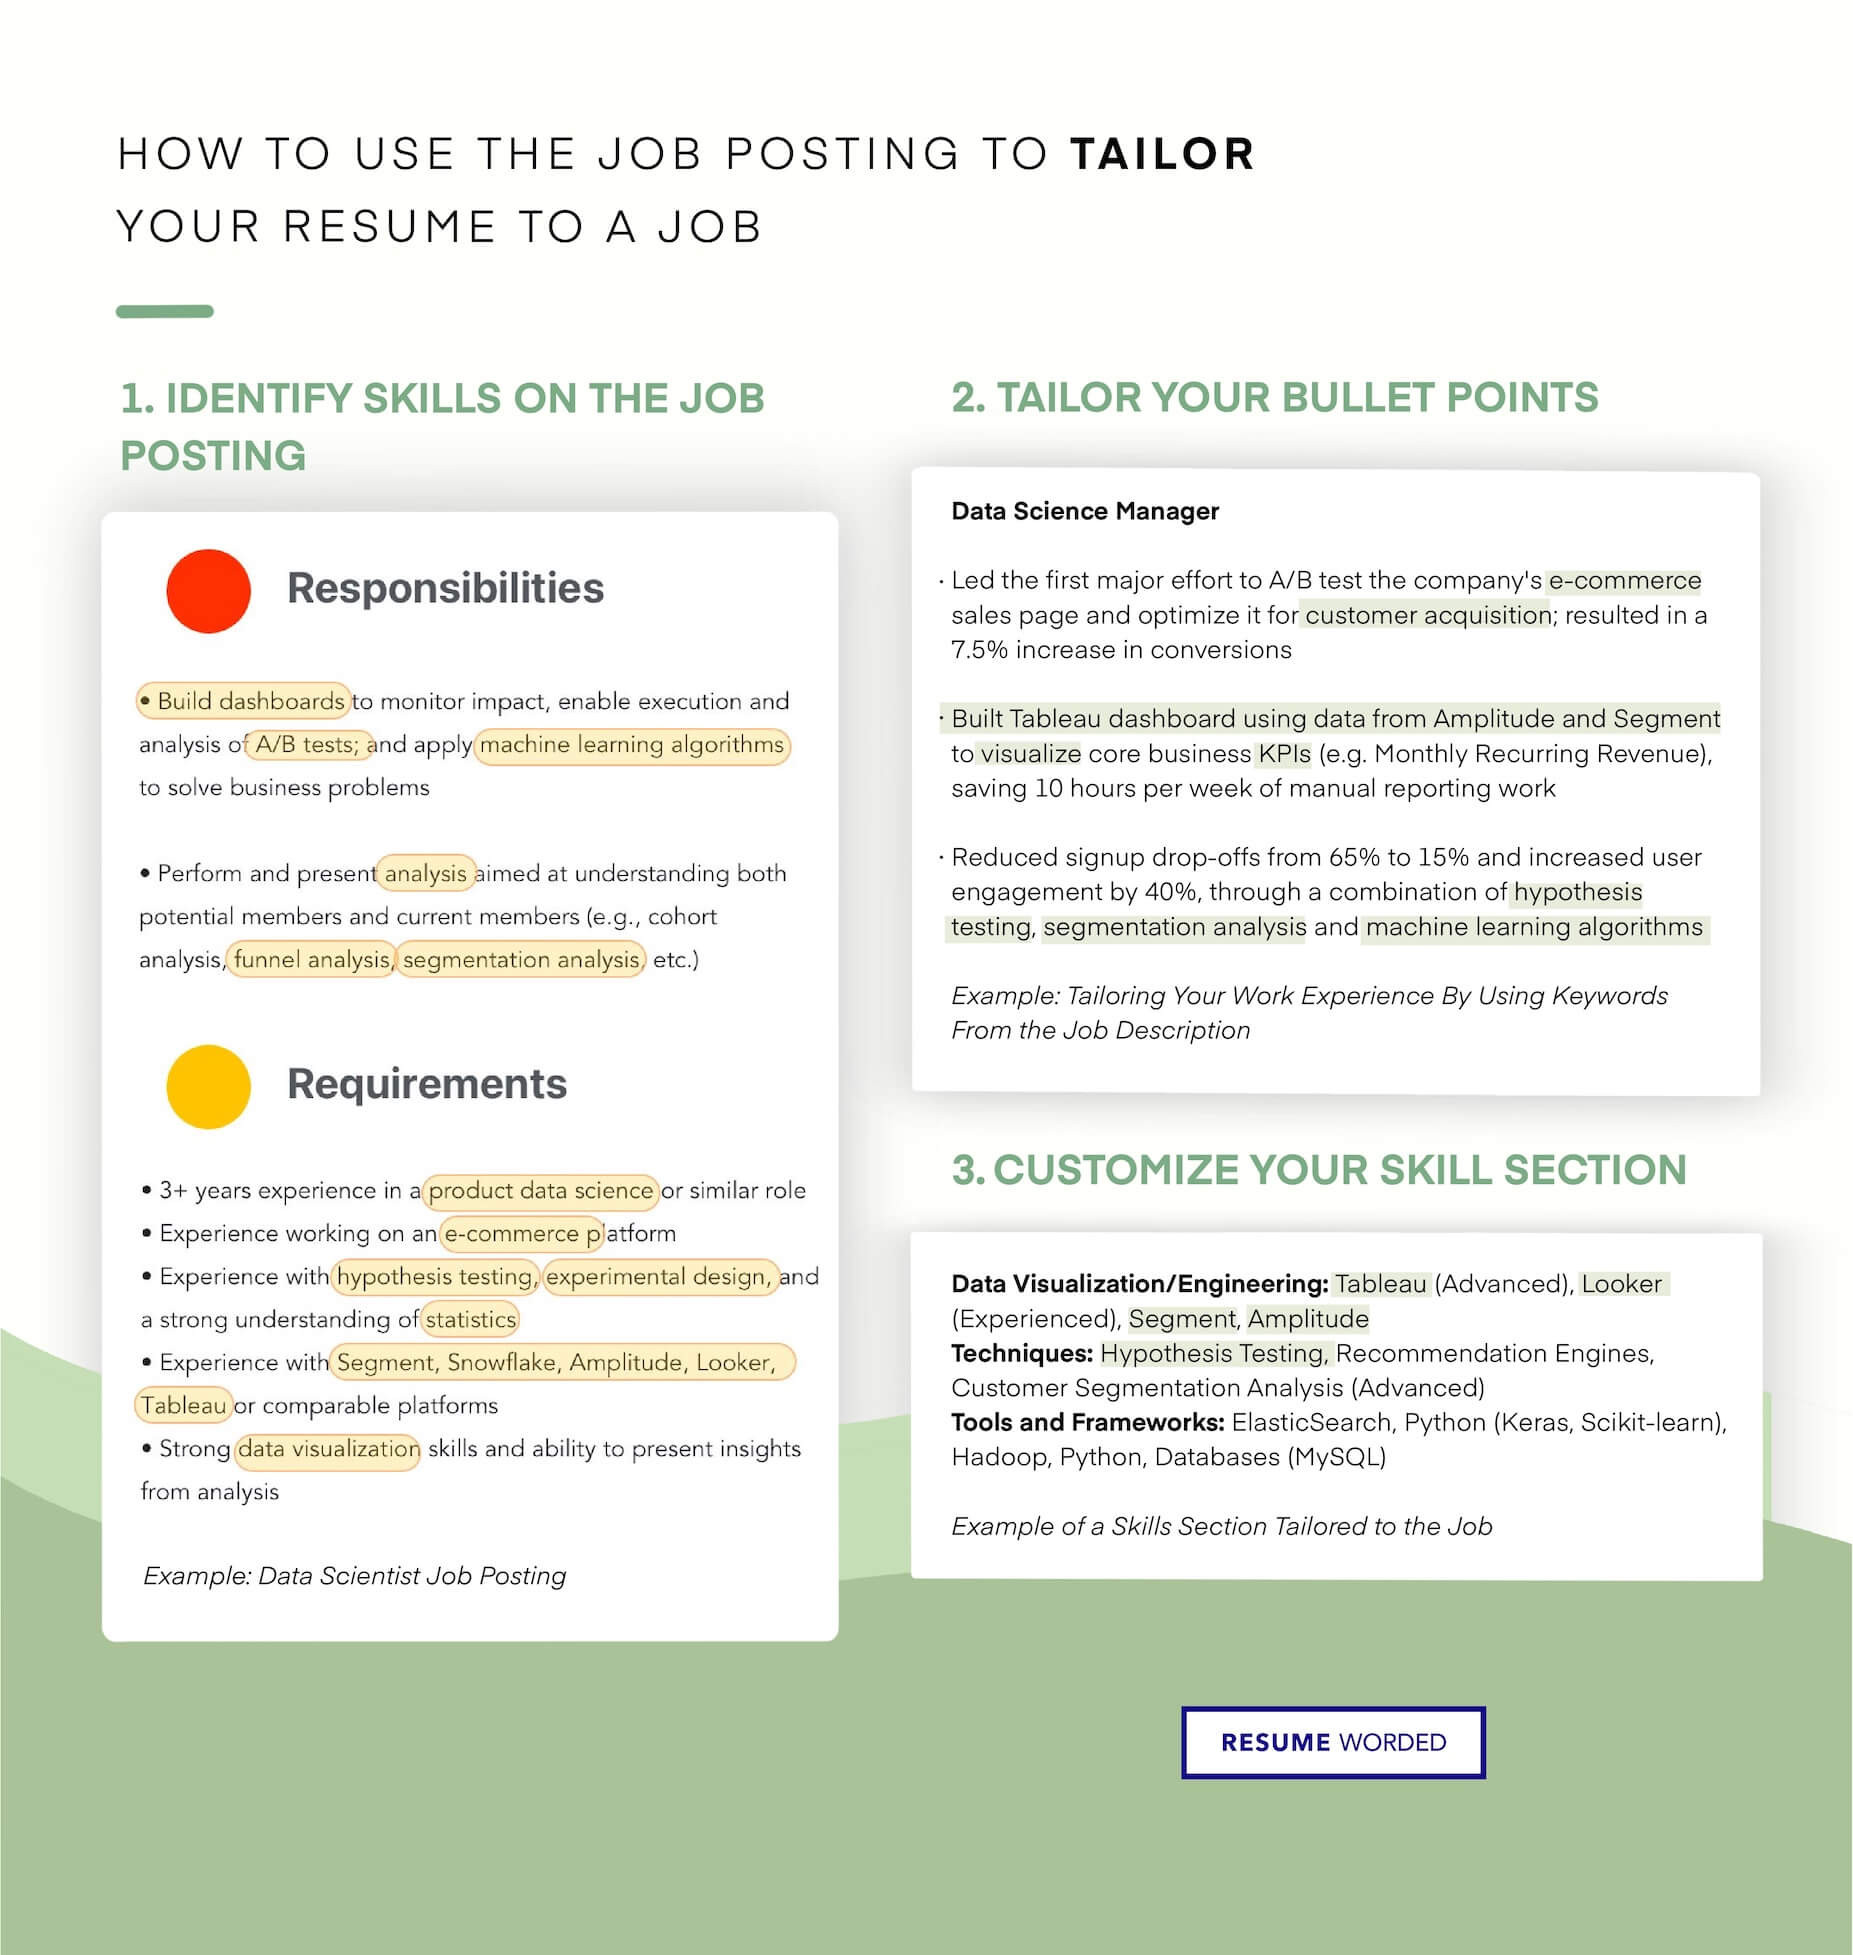 Sample Material Handler Resume Job Description Resume Skills and Keywords for Material Handler (updated for 2022)